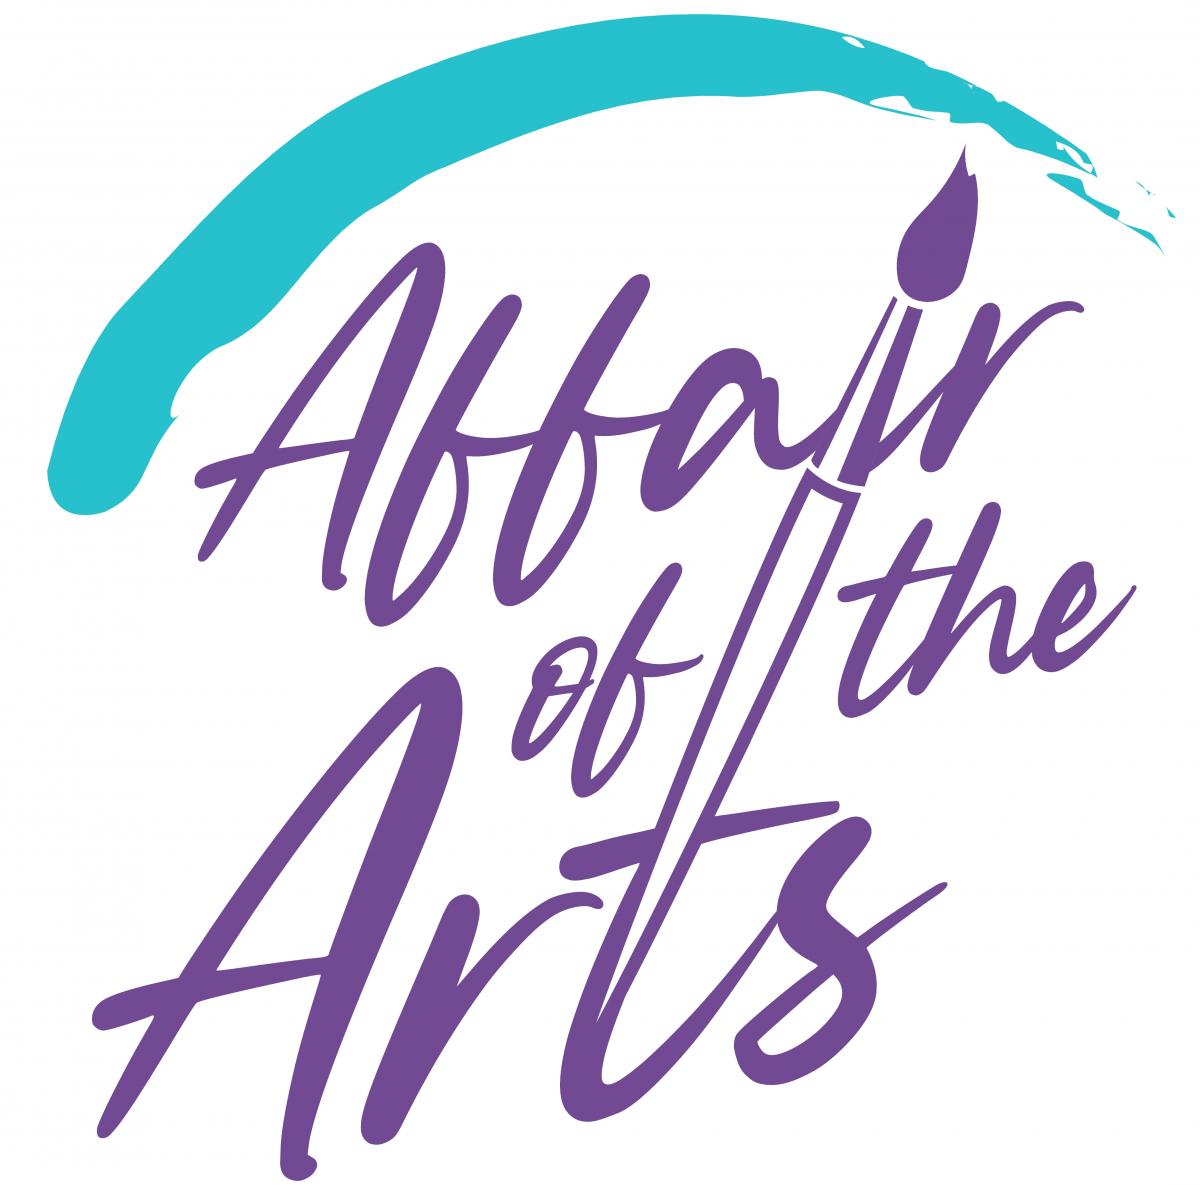 Affair of the Arts 3rd Annual